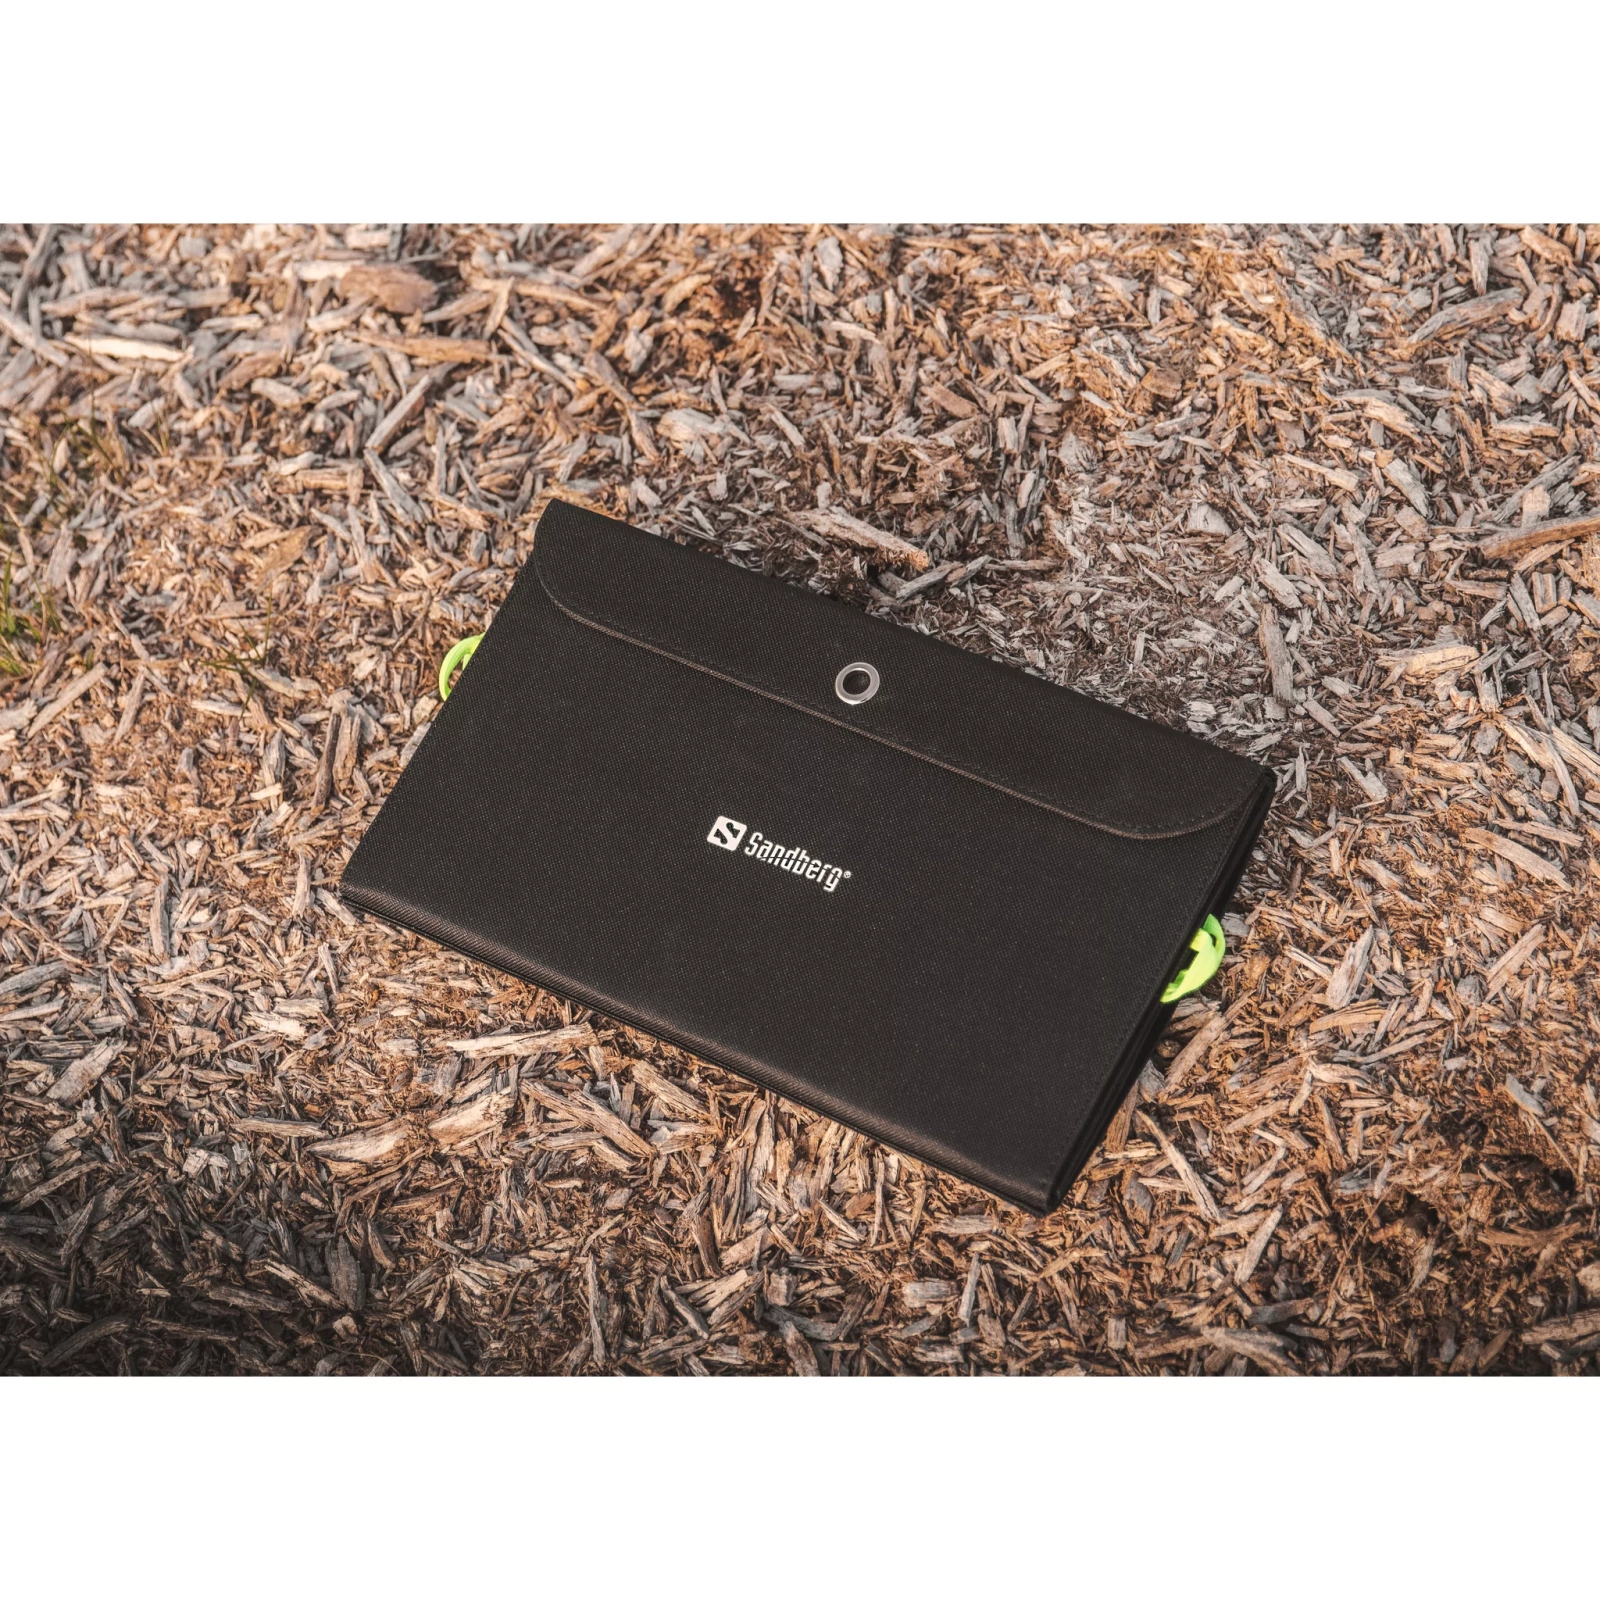 Батарея универсальная Sandberg 10000mAh, Solar Charger 21W, PD/18W, QC/3.0, USB-C, USB-A*2 (420-55) изображение 4